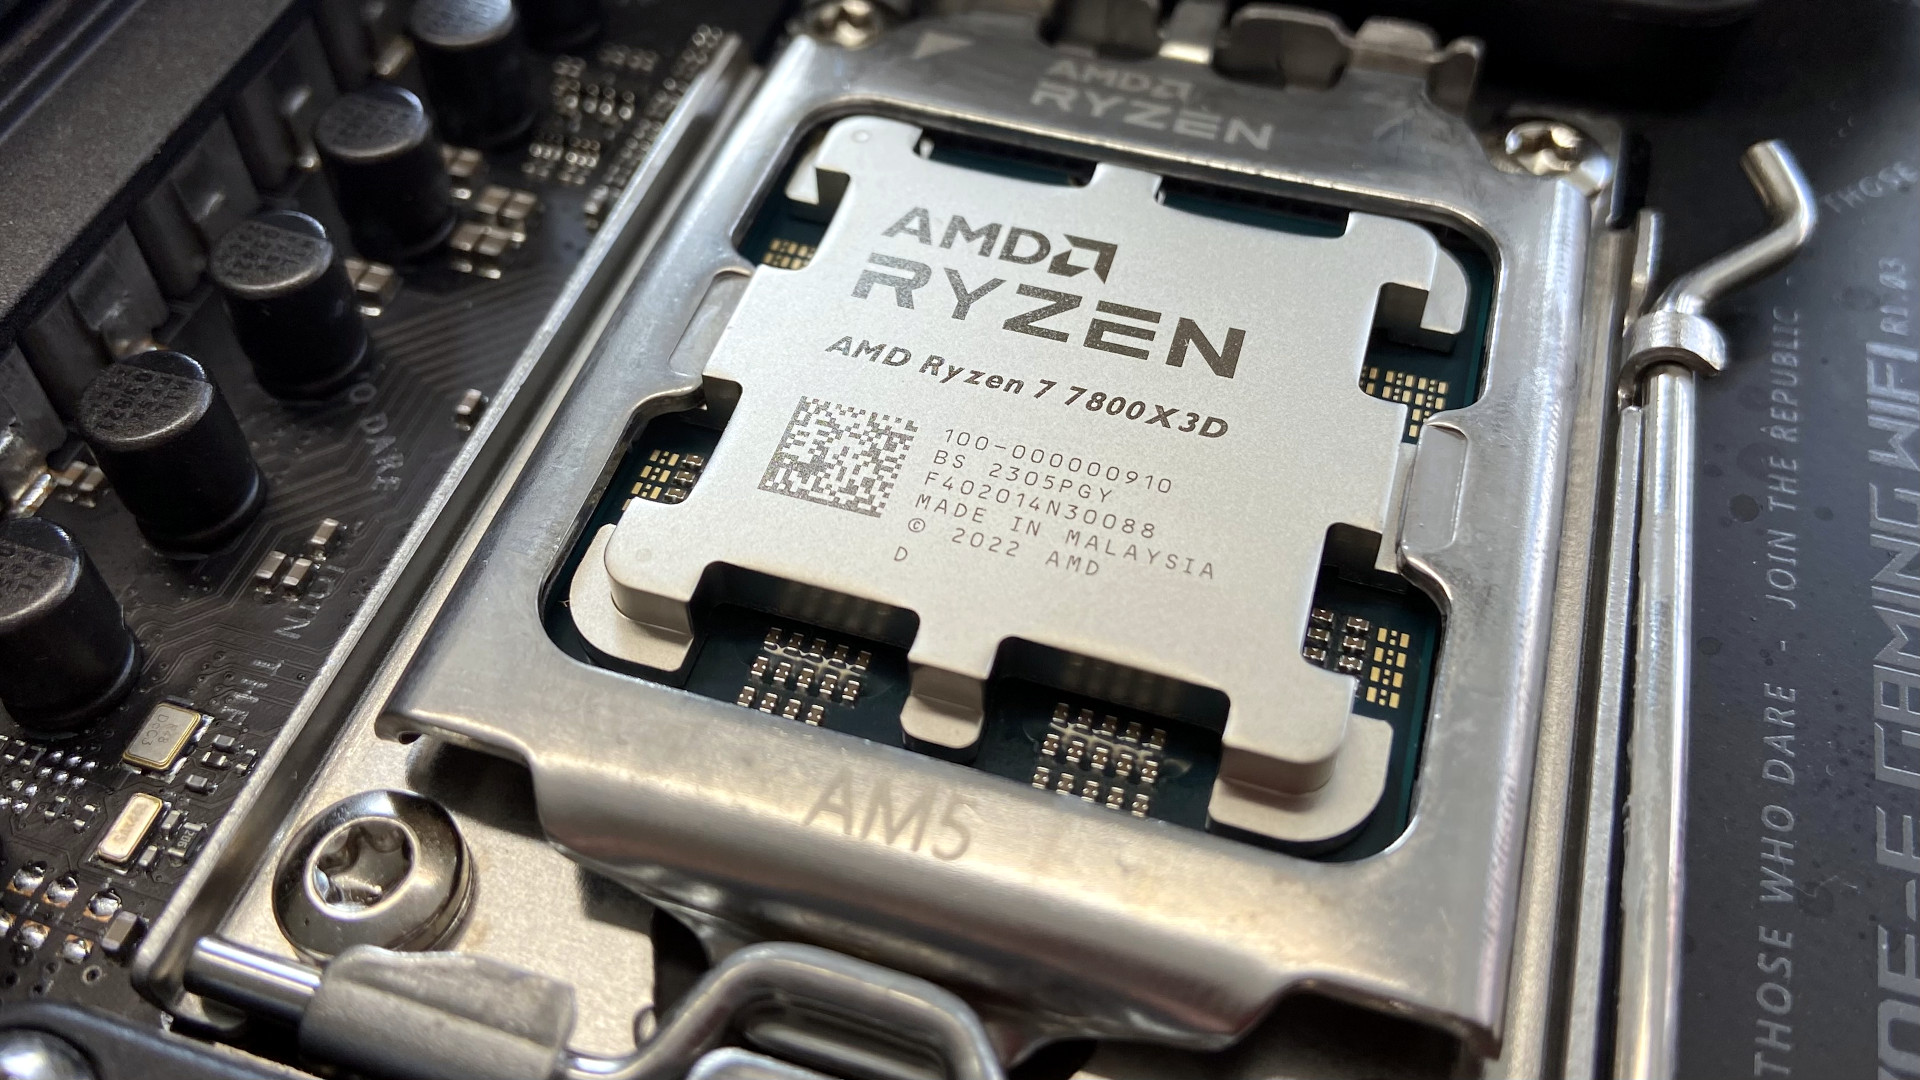 Ryzen 7 7800x. Процессор Ryzen 7800x3d. AMD 7800x3d. I9 14900k. Amd ryzen 7 7800x3d цены